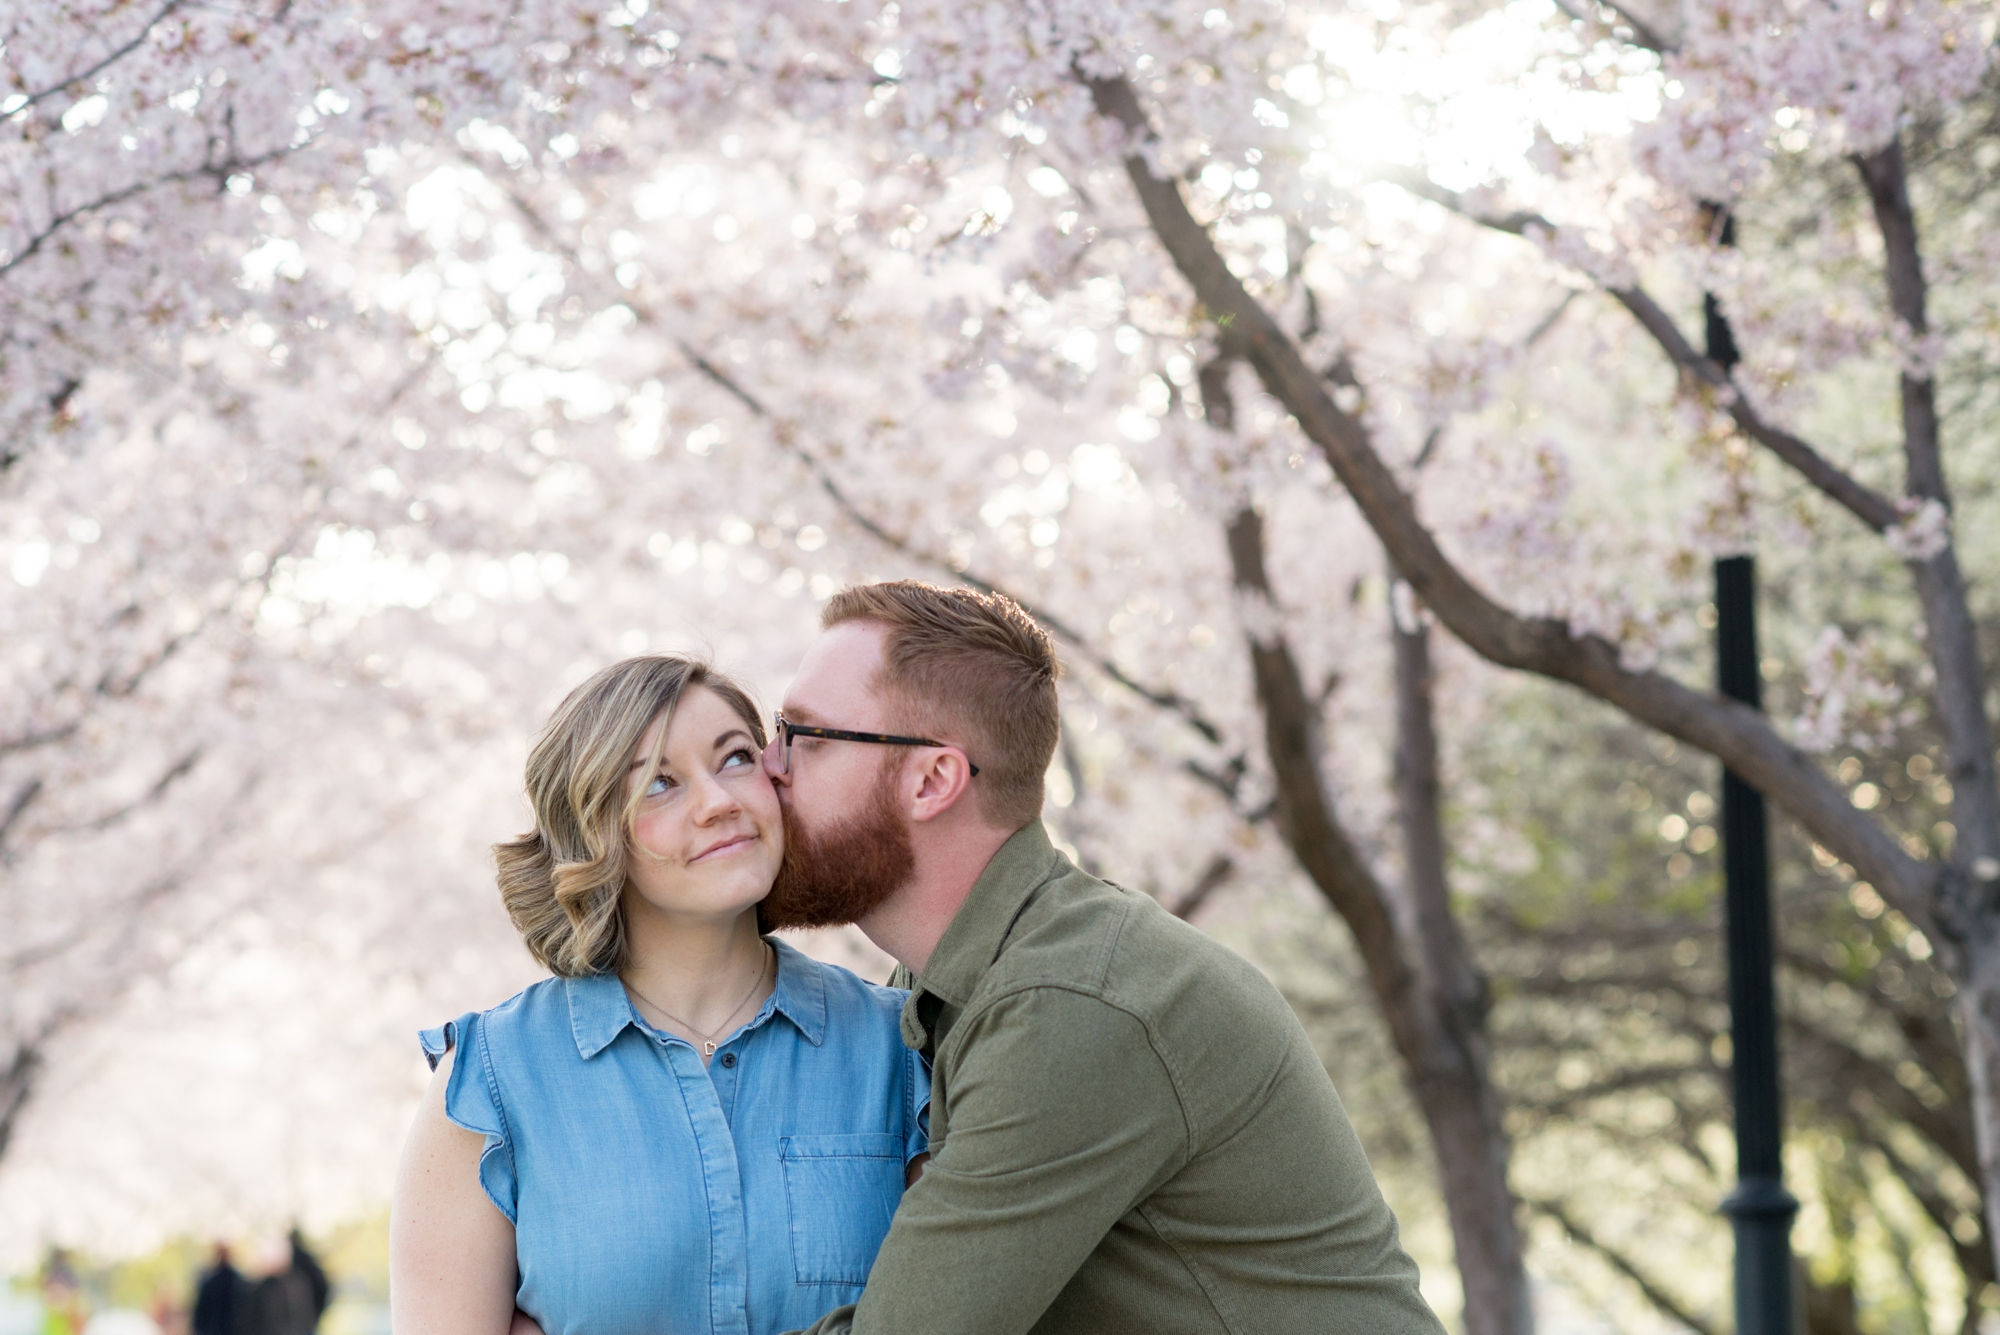 Rachel & Brad Engagement Photoshoot by The Aperture Company in Salt Lake City Utah